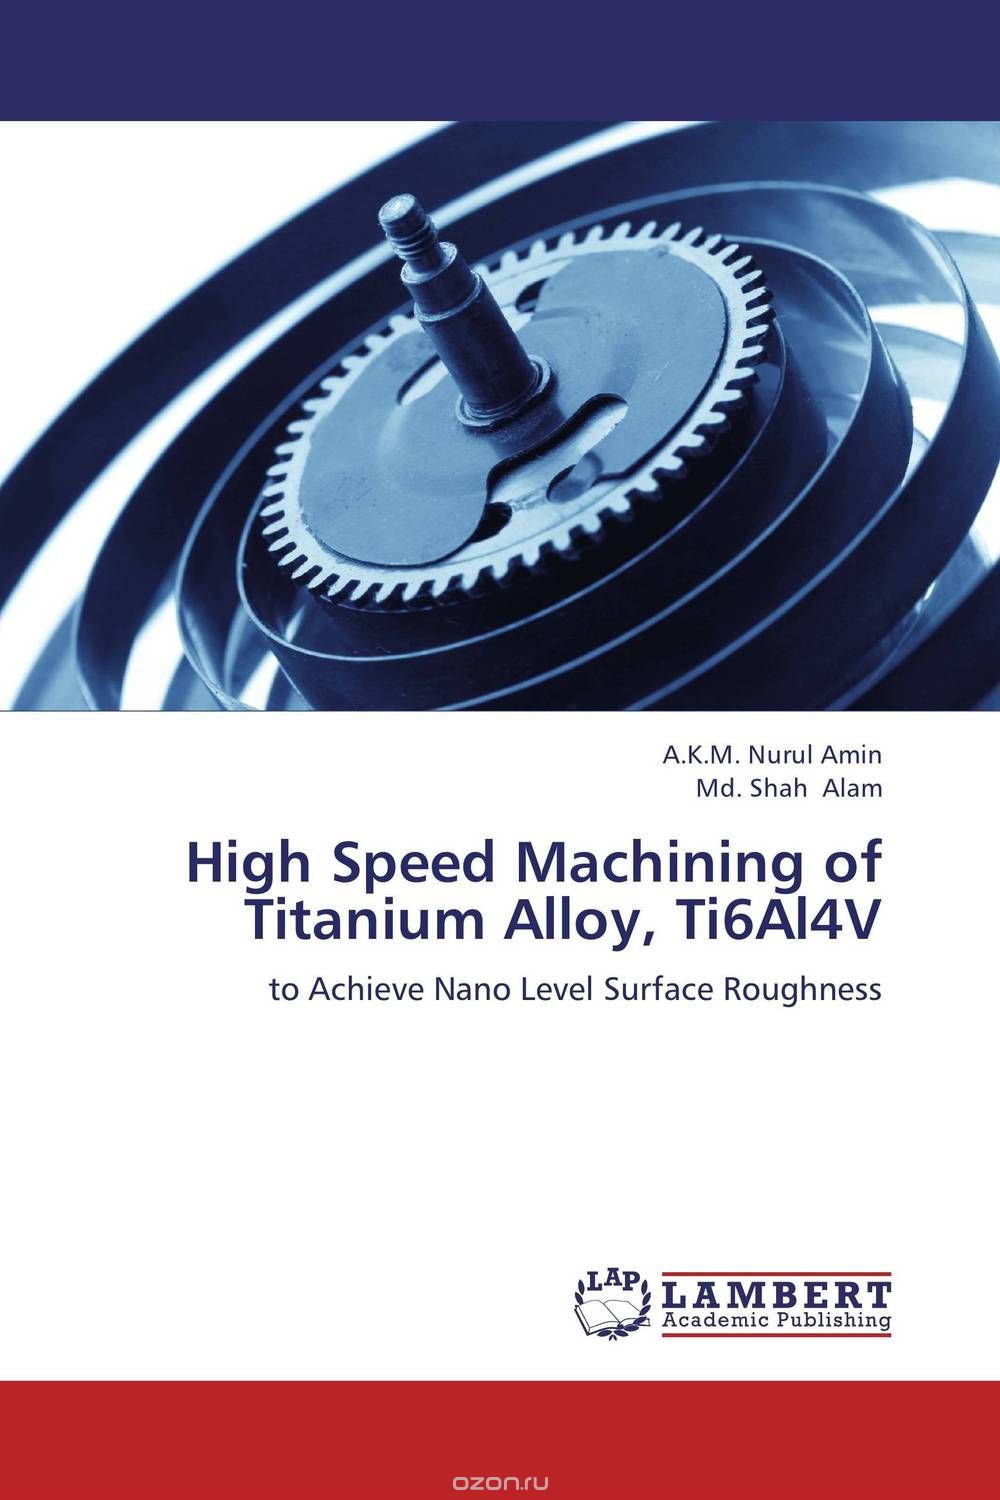 High Speed Machining of Titanium Alloy, Ti6Al4V